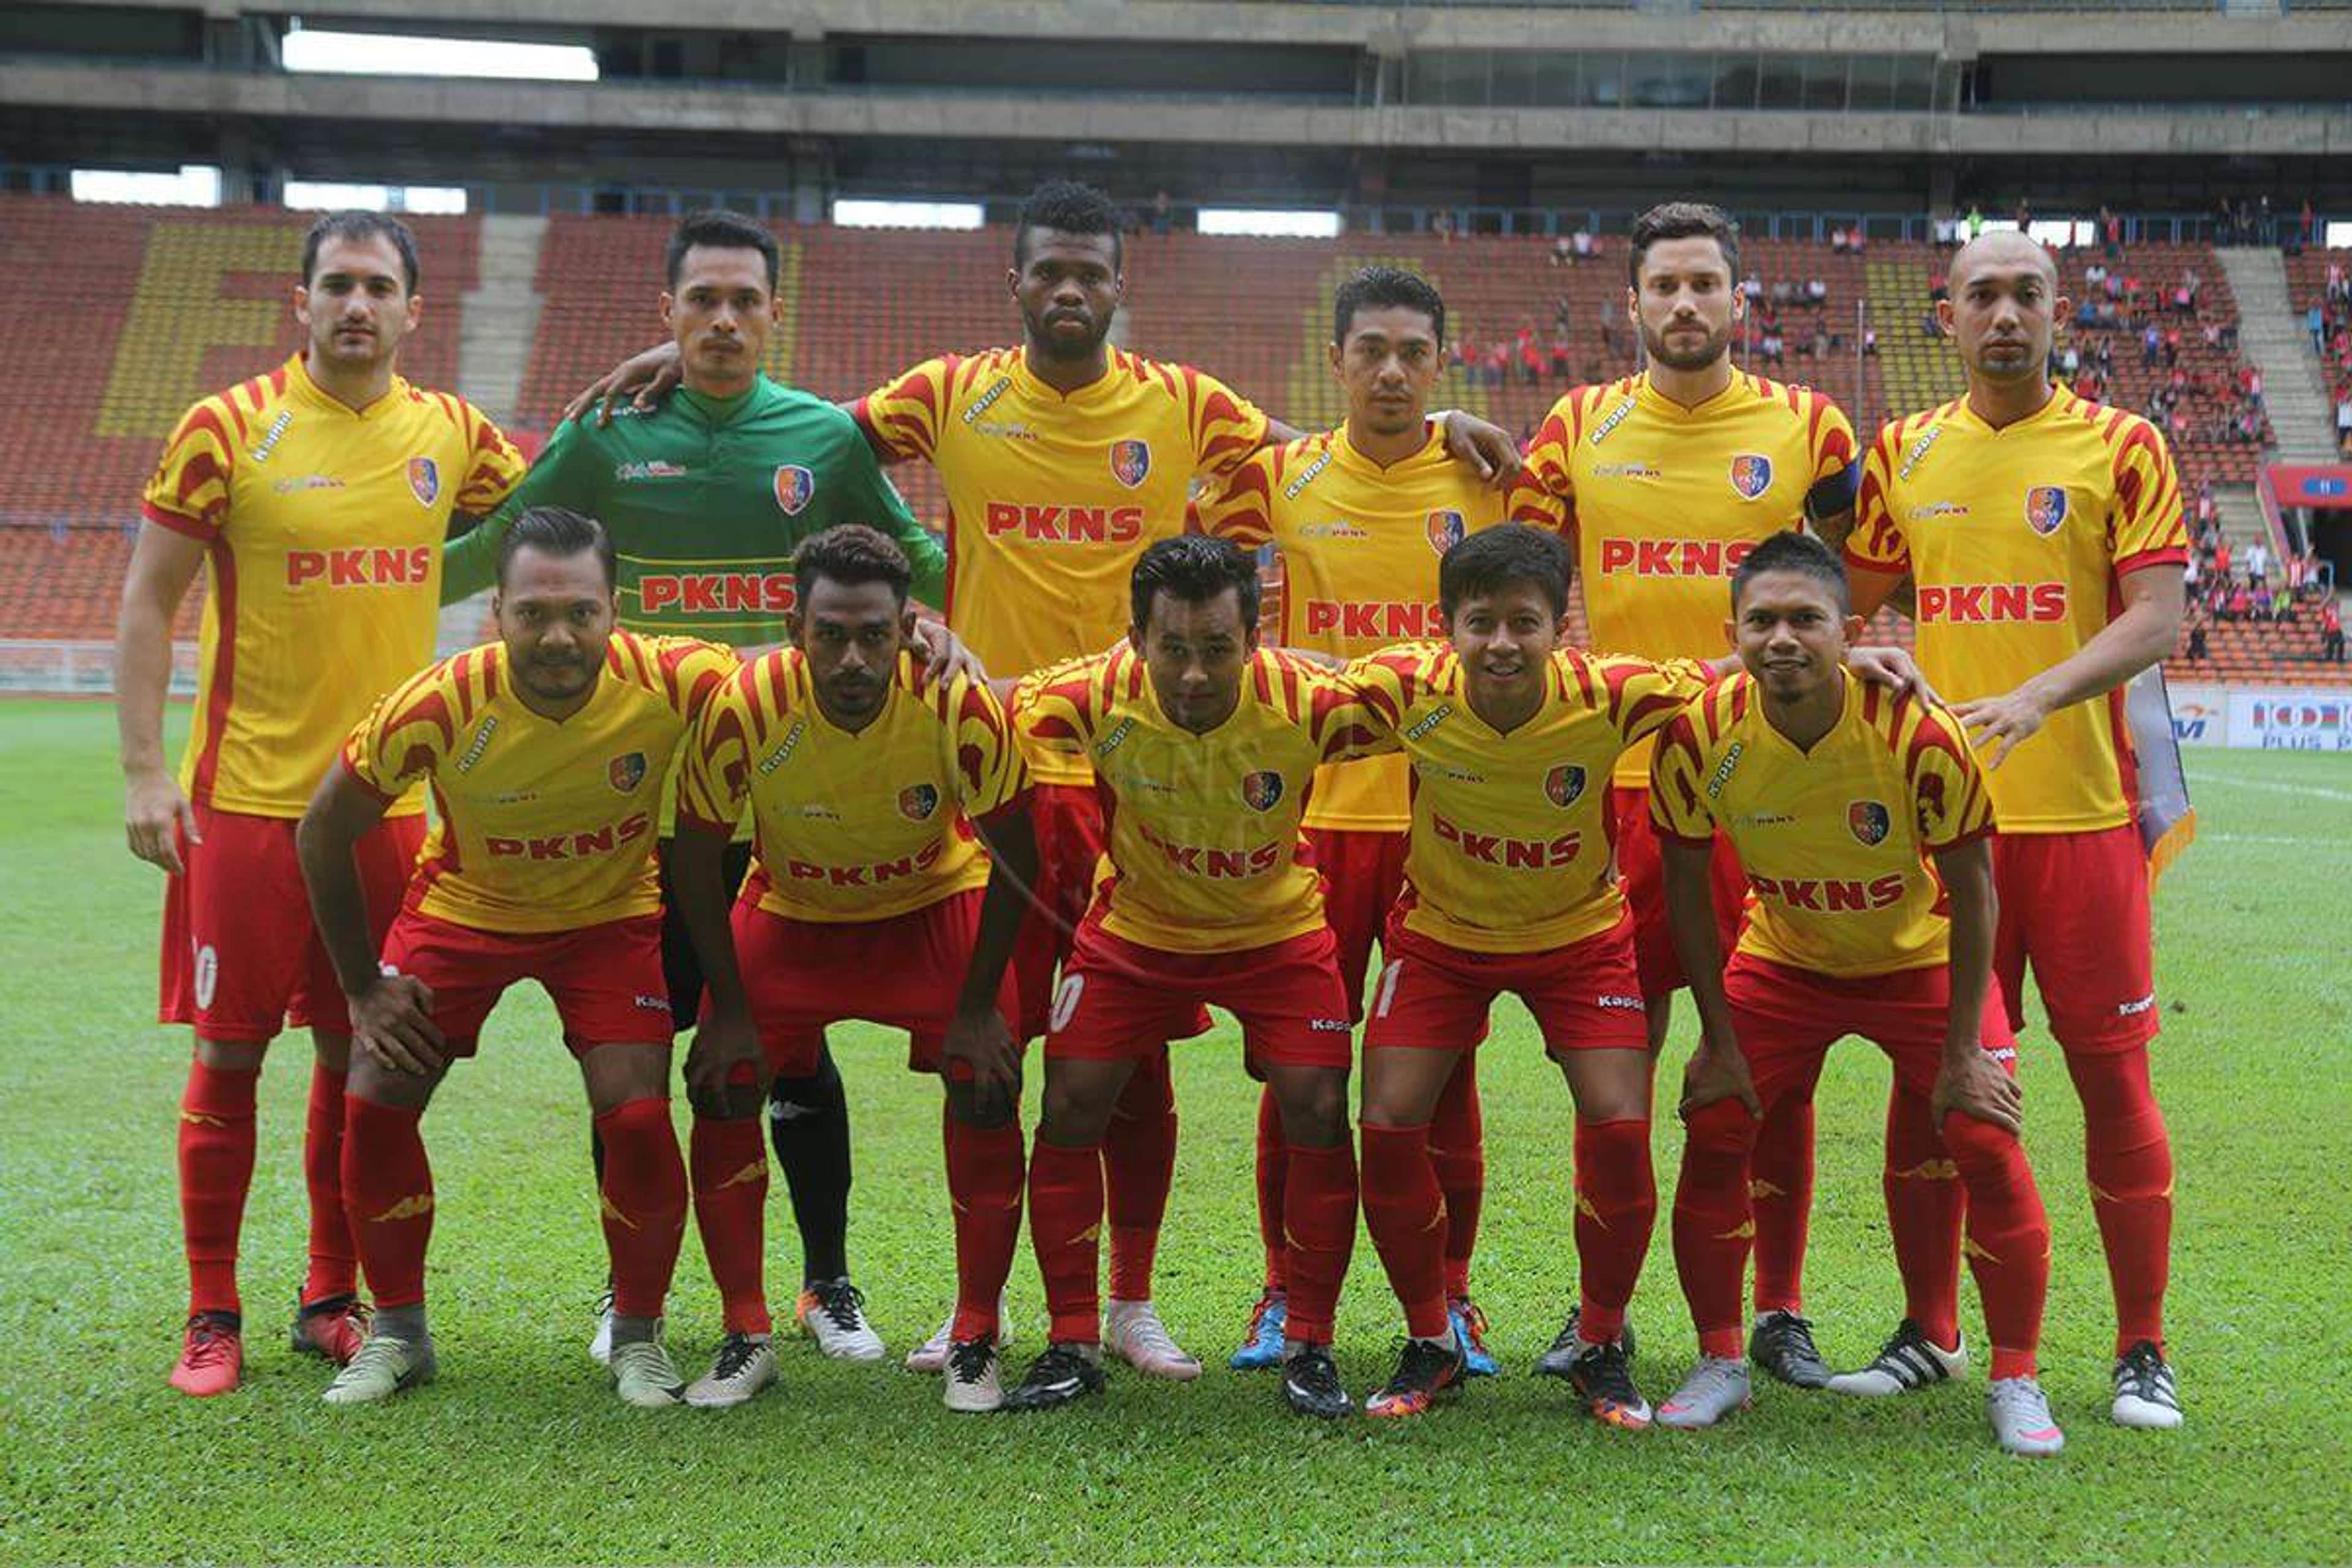 PKNS first eleven against Kelantan 27/1/2017